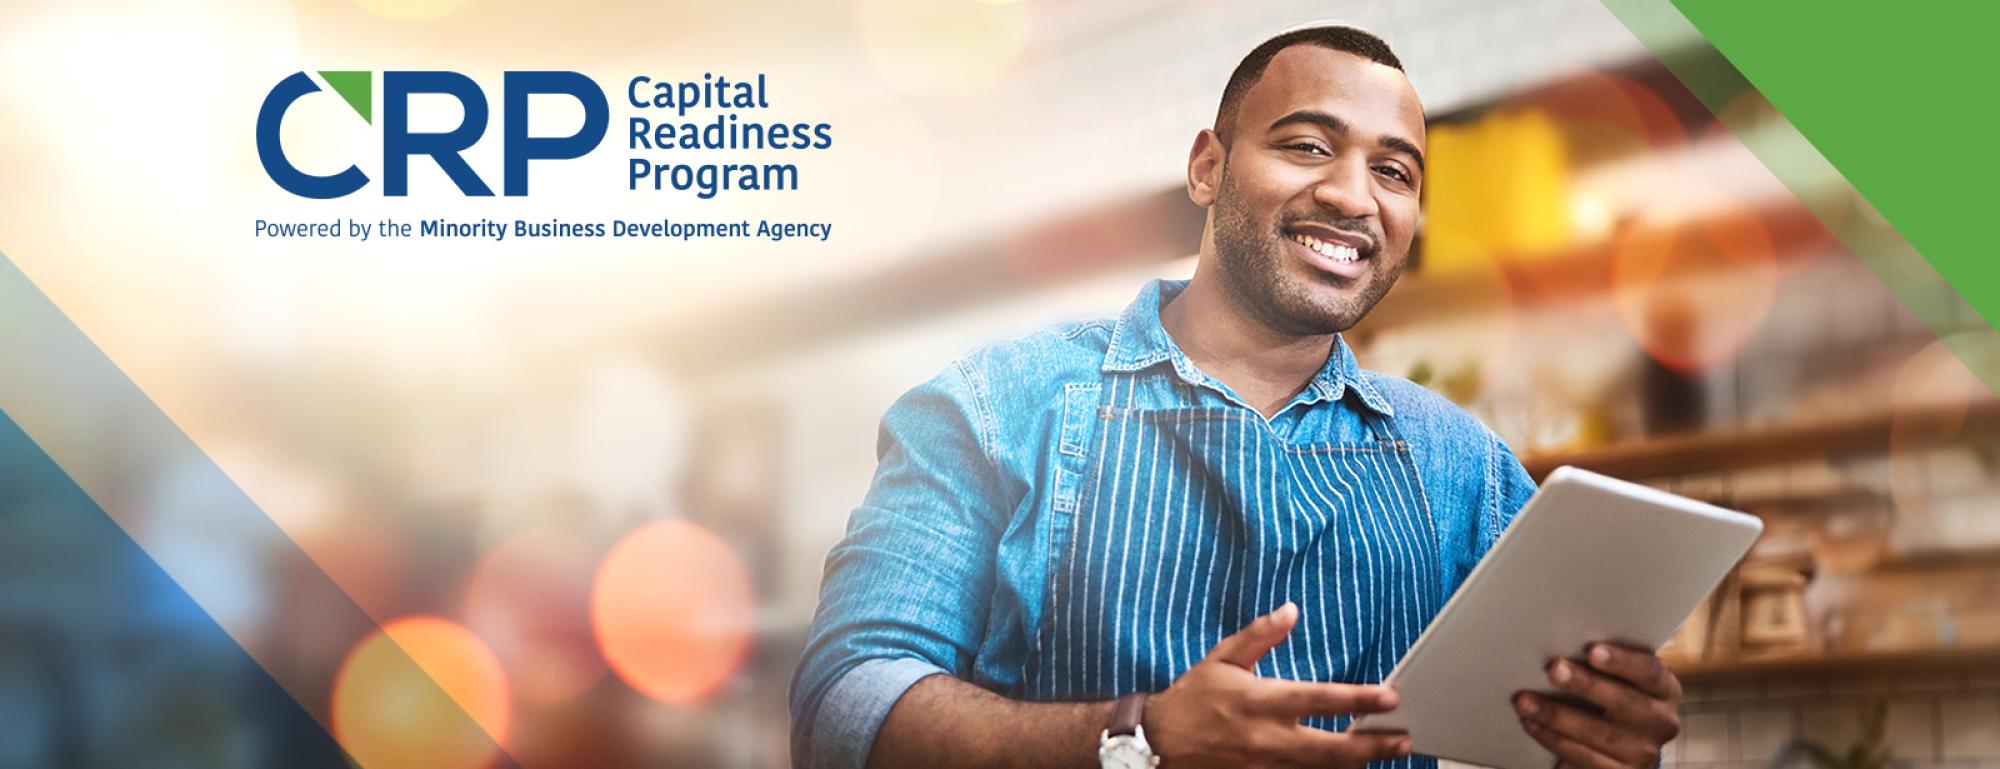 Capital Readiness Program Marquee Image